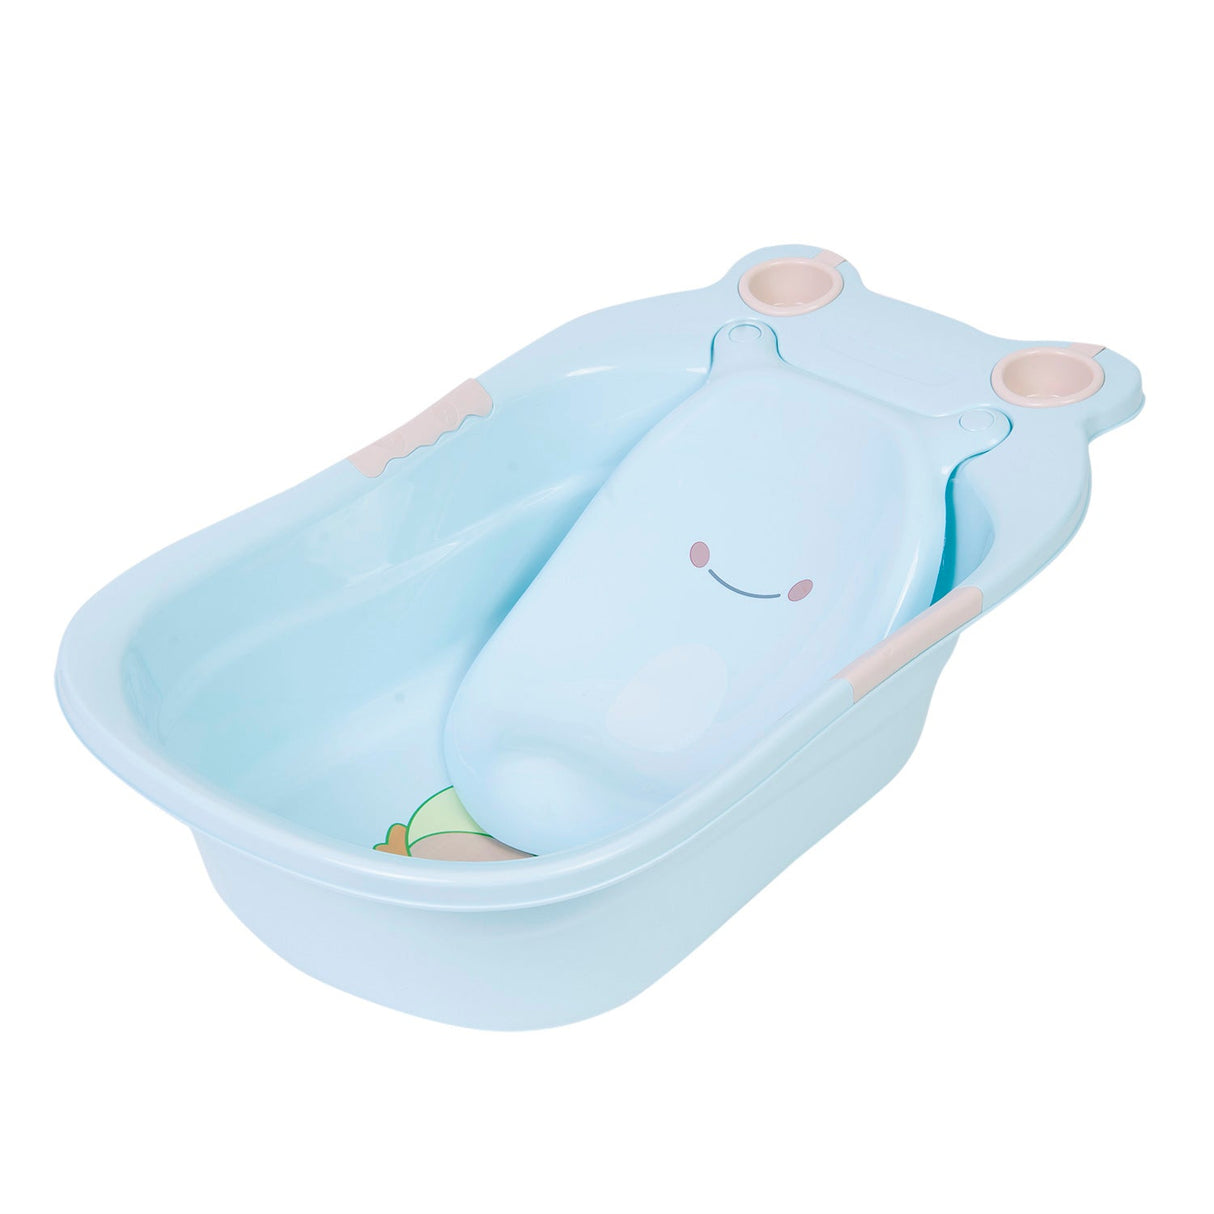 Baby Moo Bath Tub With Bather And Drain Plug Animal Face